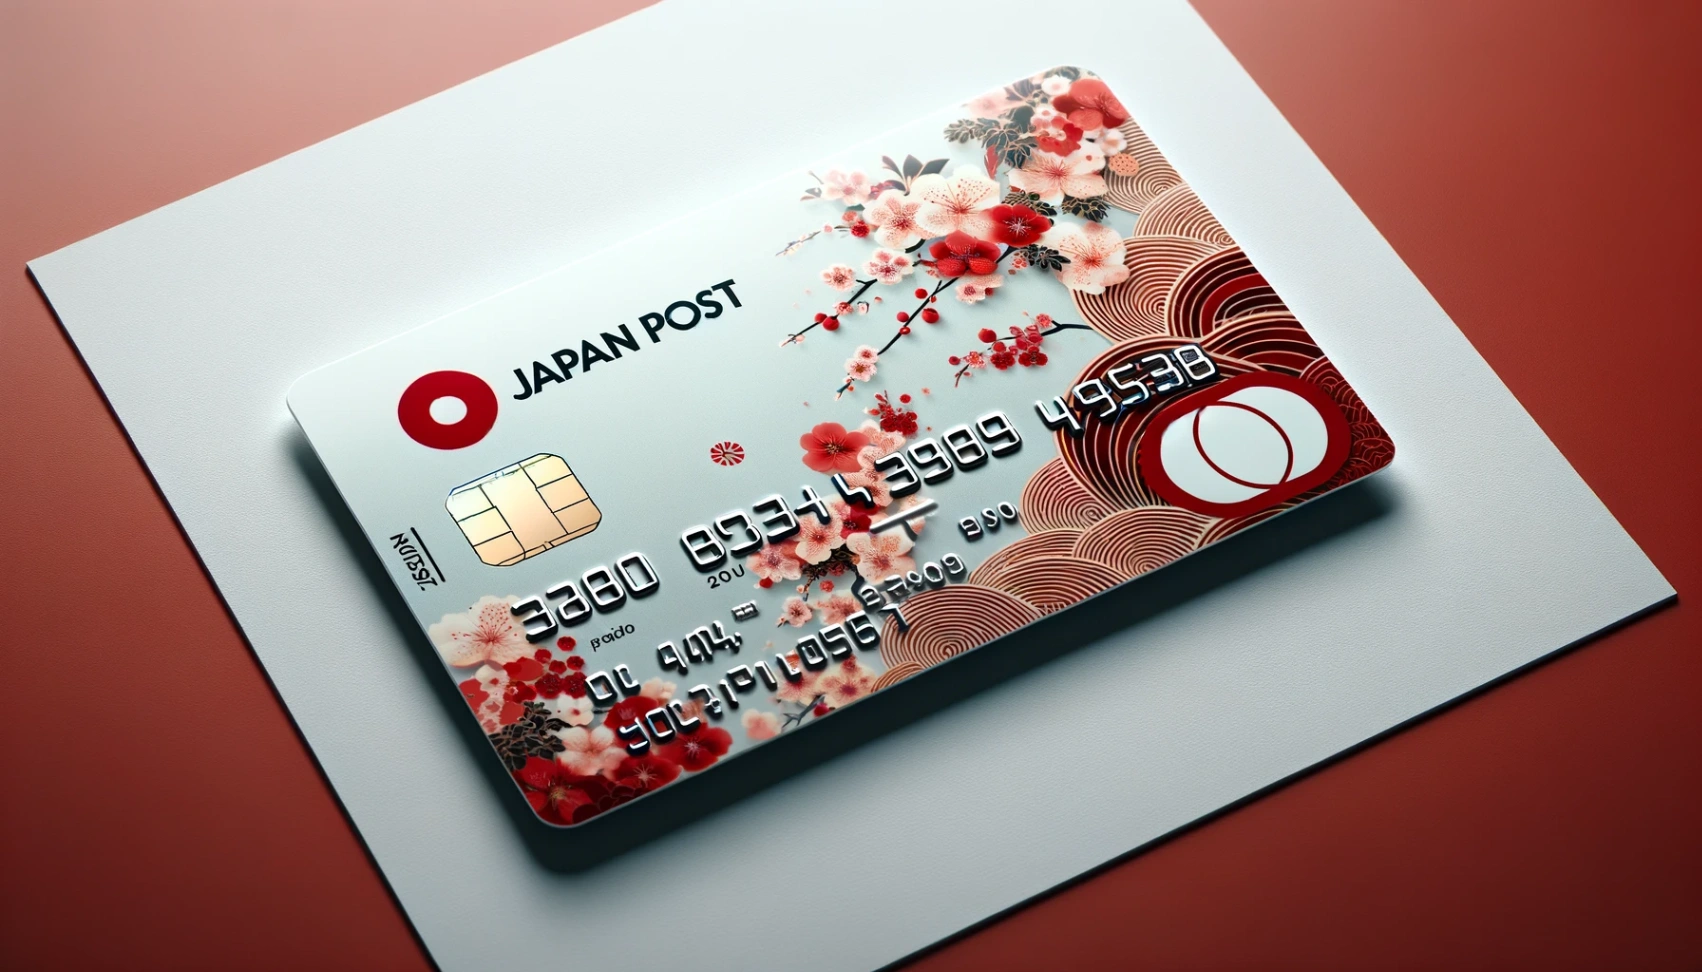 Japan Post Visa Credit Card - How to Apply Online